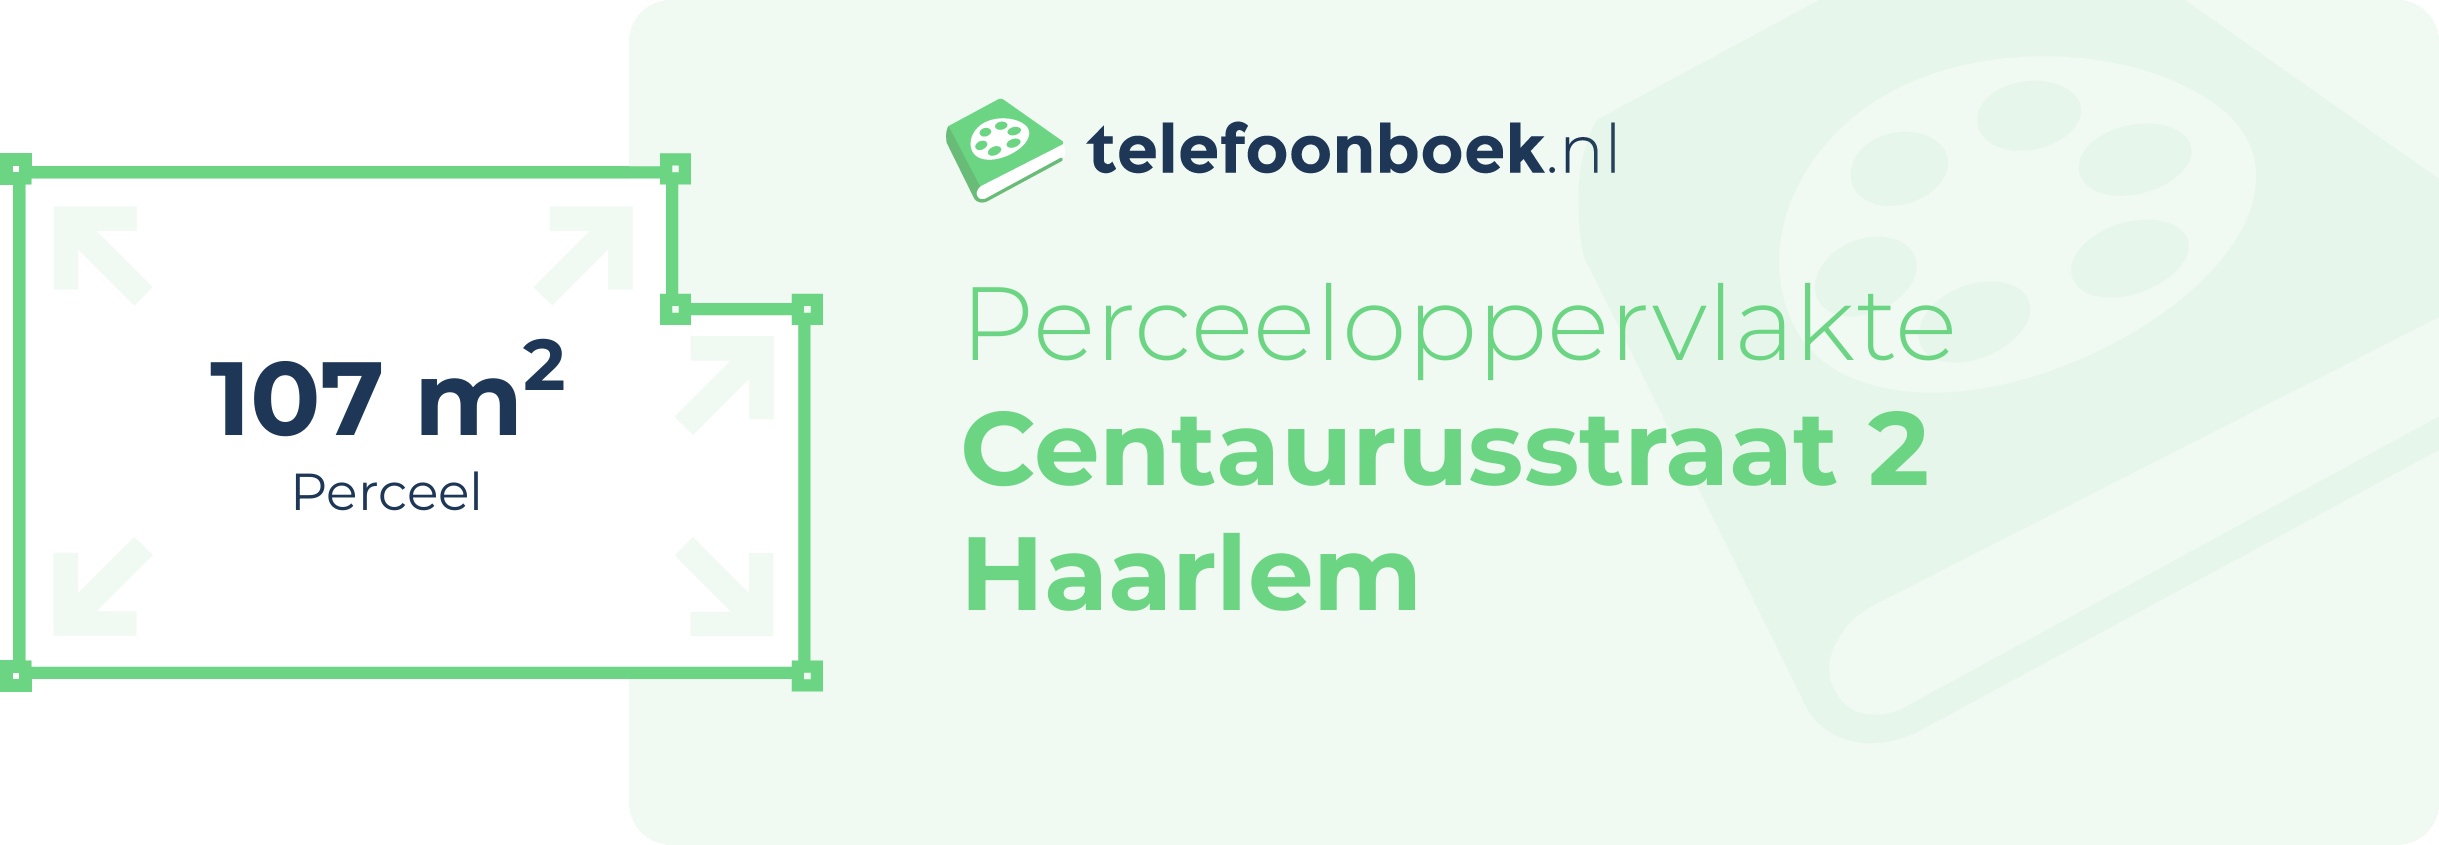 Perceeloppervlakte Centaurusstraat 2 Haarlem